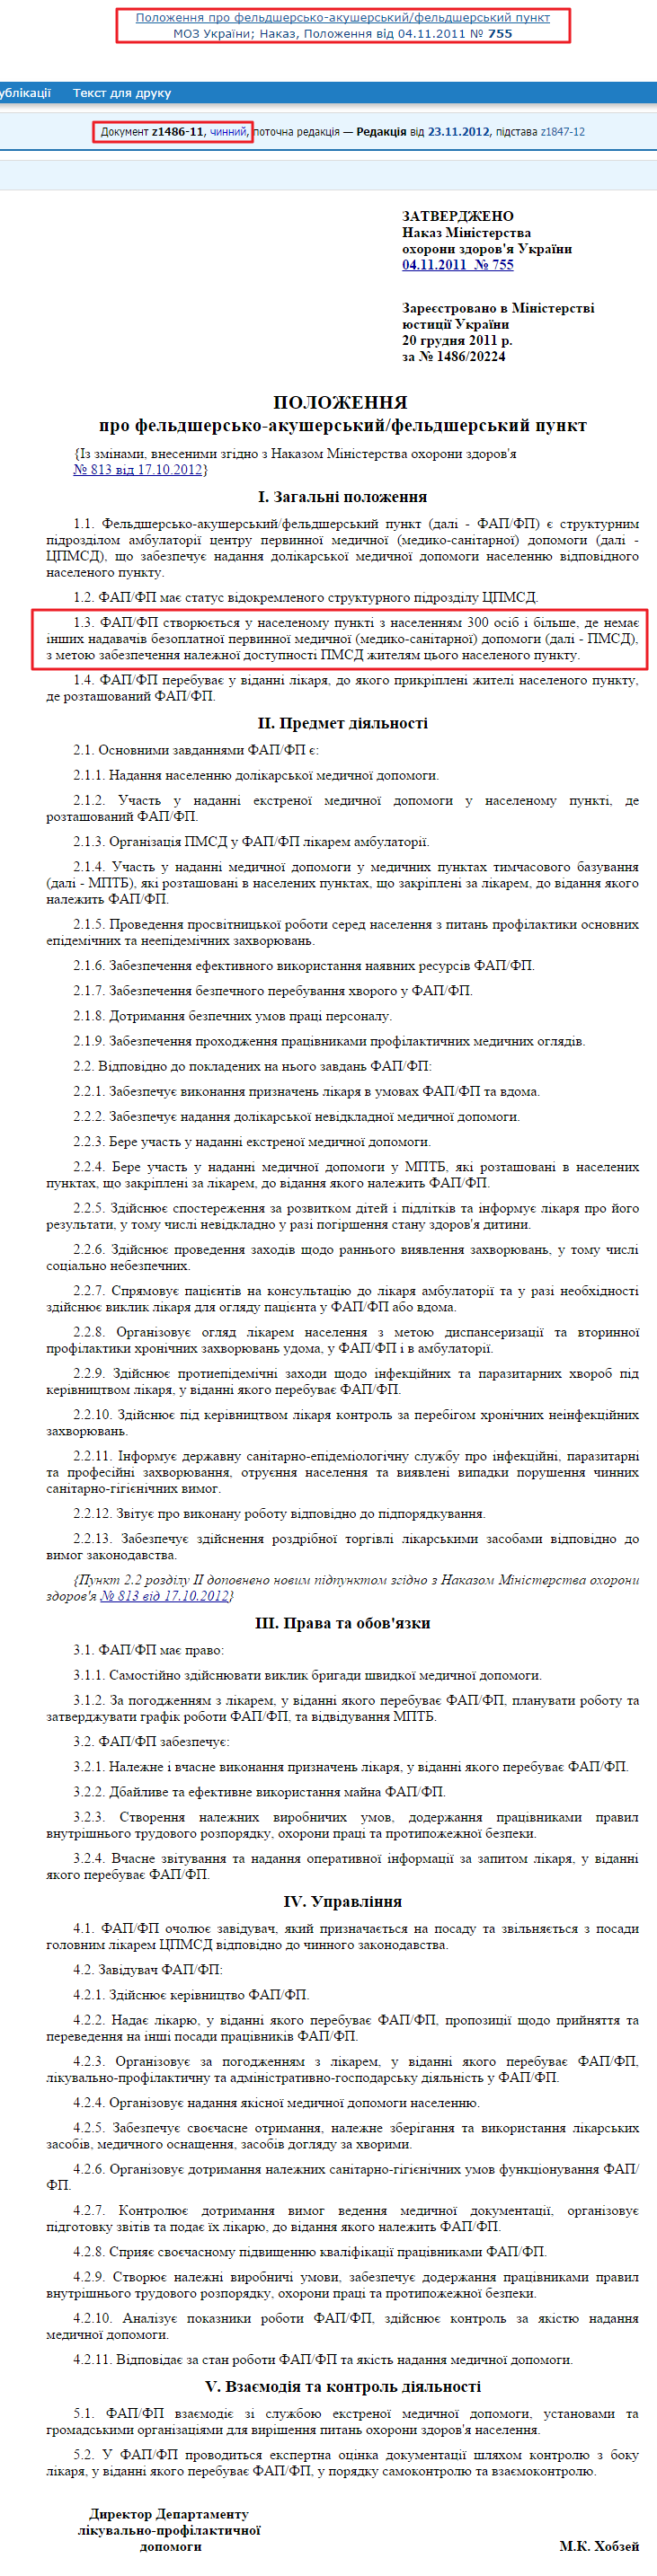 http://zakon2.rada.gov.ua/laws/show/z1486-11